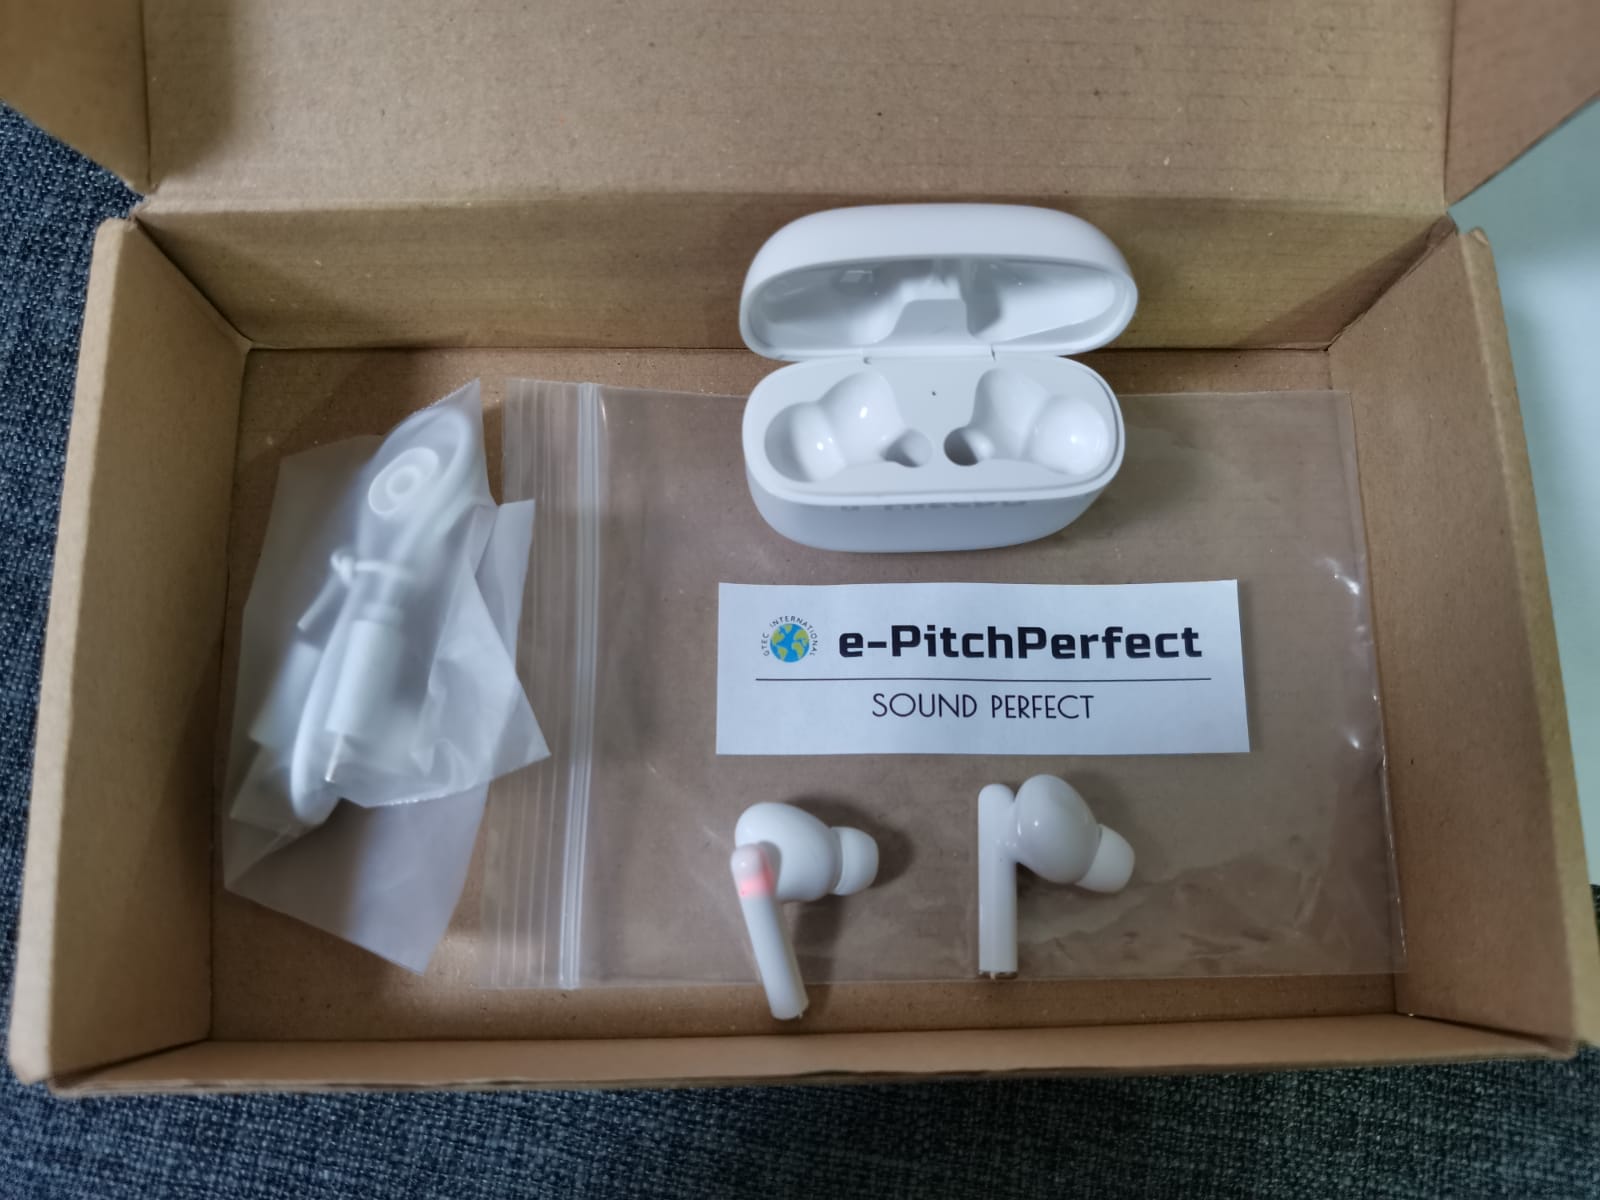 GTEC INTERNATIONAL 的 e-PitchPerfect (e-PP) BT 耳塞。最好的质量和清晰的声音、质量结构和最先进的蓝牙和声音技术在美国设计和制造